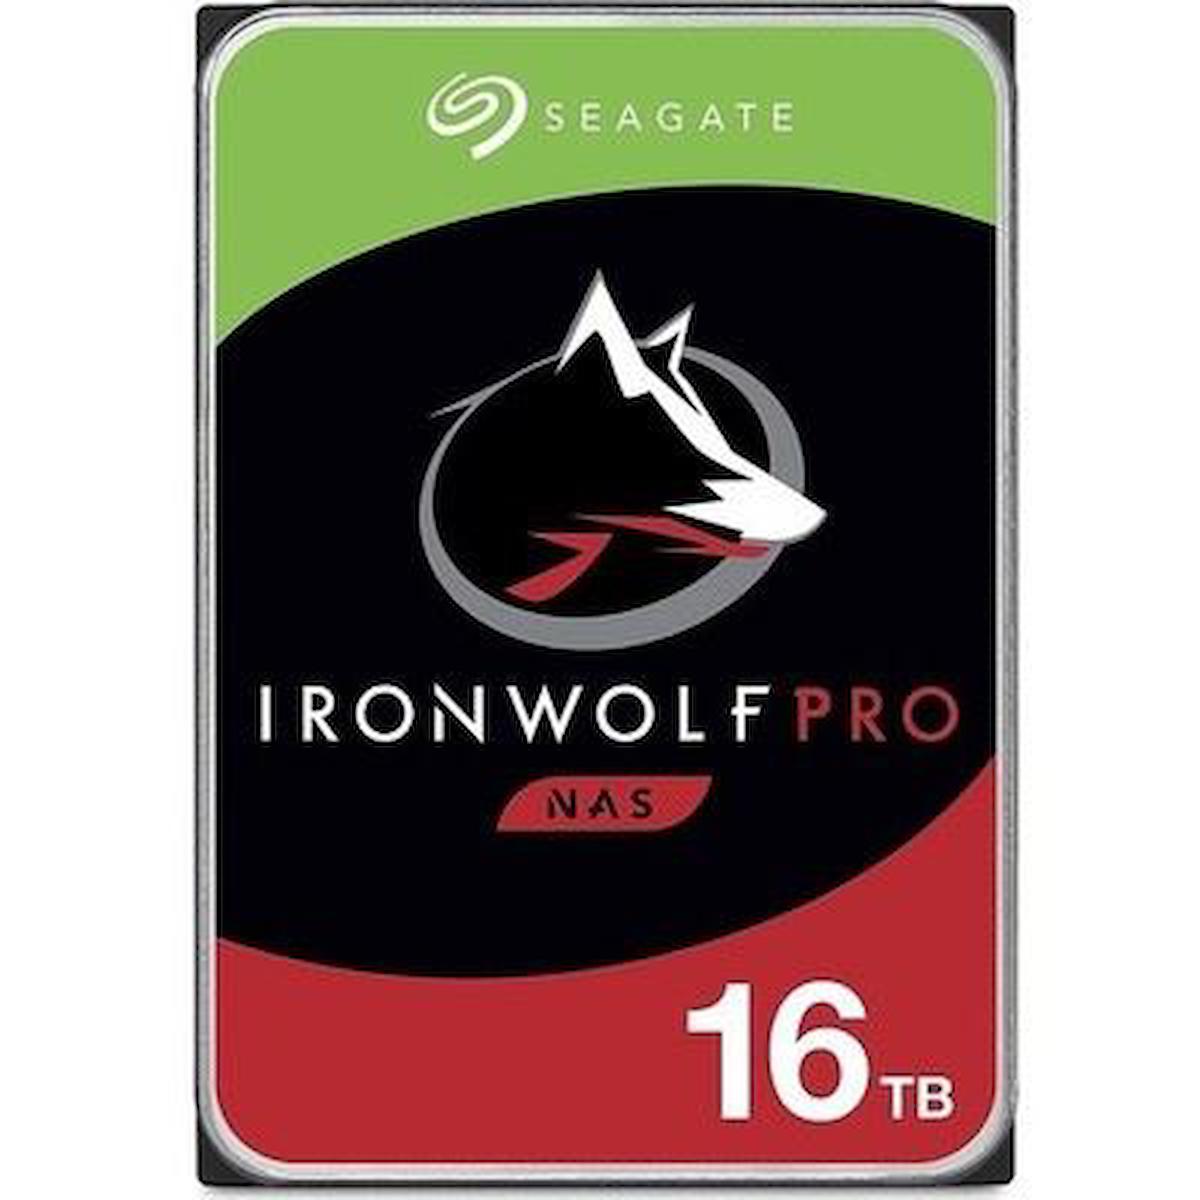 Seagate Ironwolf Pro New ST16000NT001 16 TB 3.5 inç 7200 RPM 256 MB SATA 3.0 Nas Harddisk